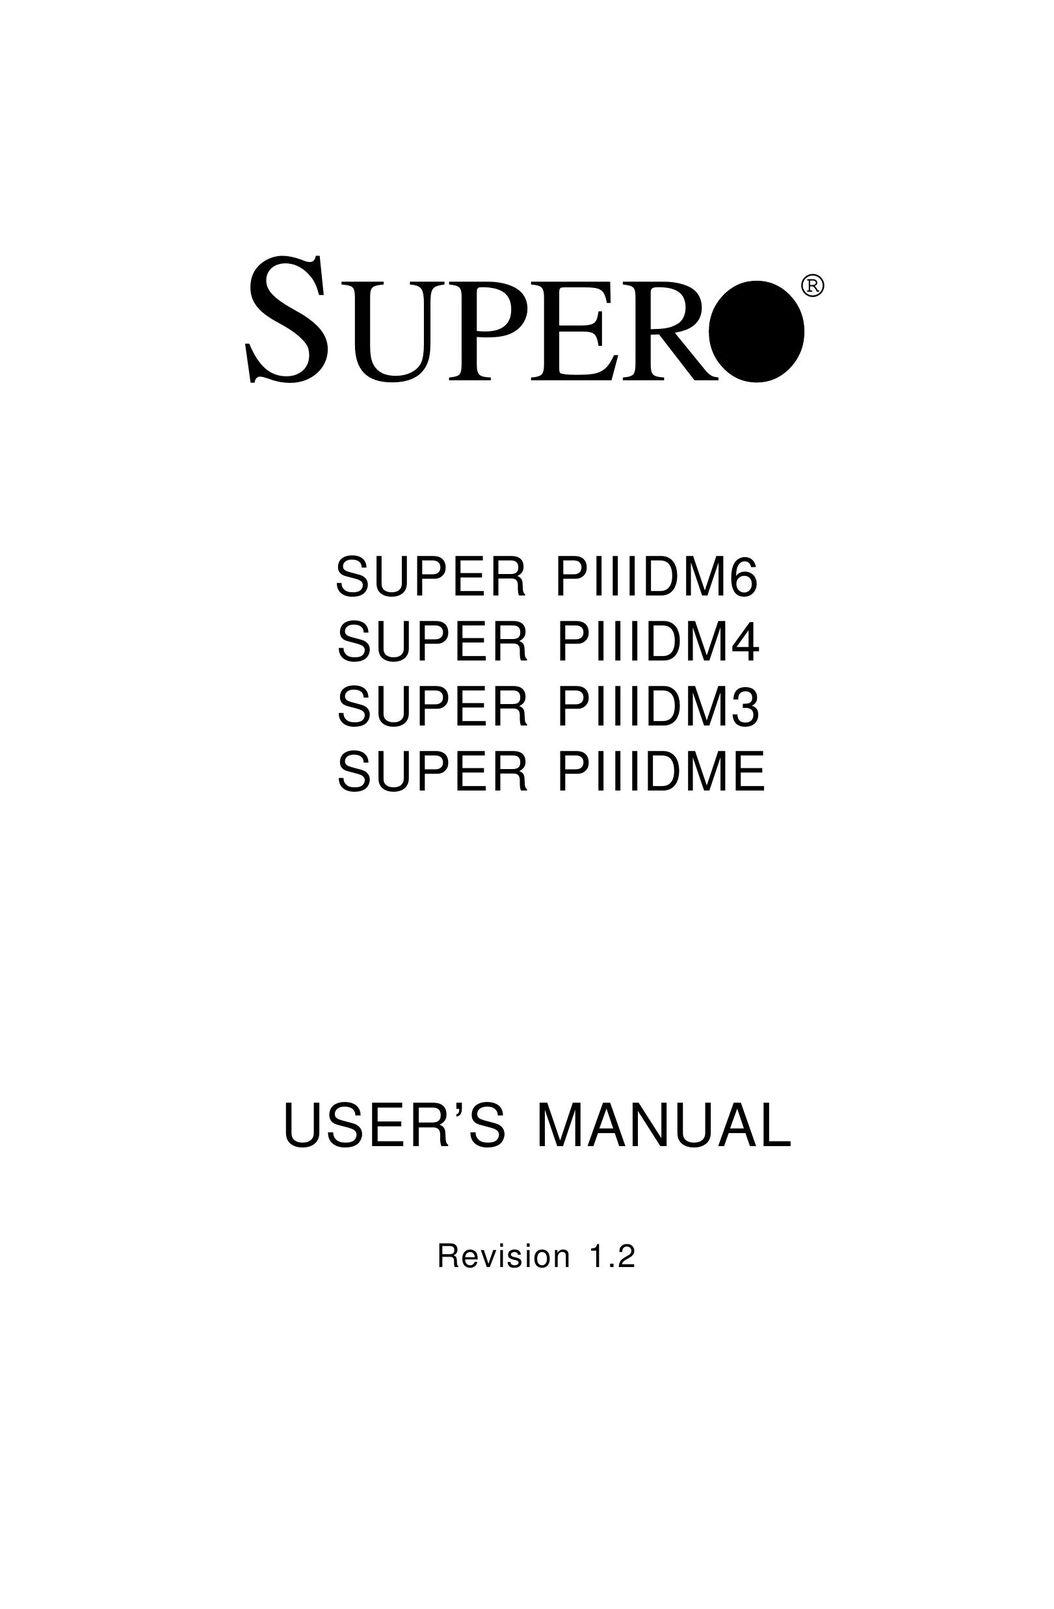 SUPER MICRO Computer Super PIIIDM3 Computer Hardware User Manual